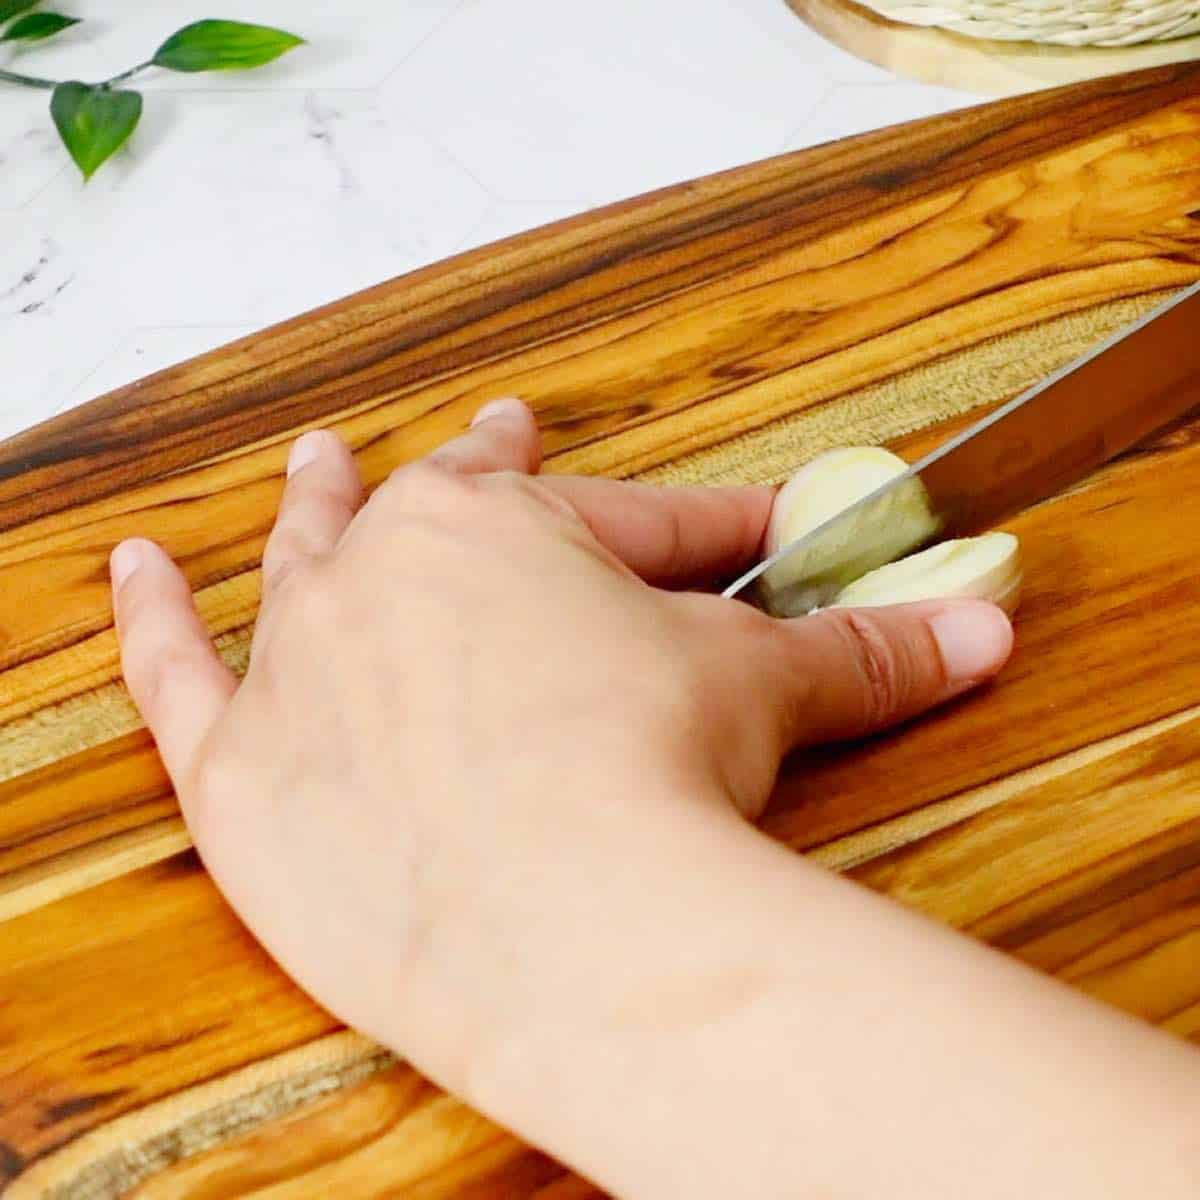 Cutting the garlic clove in half.